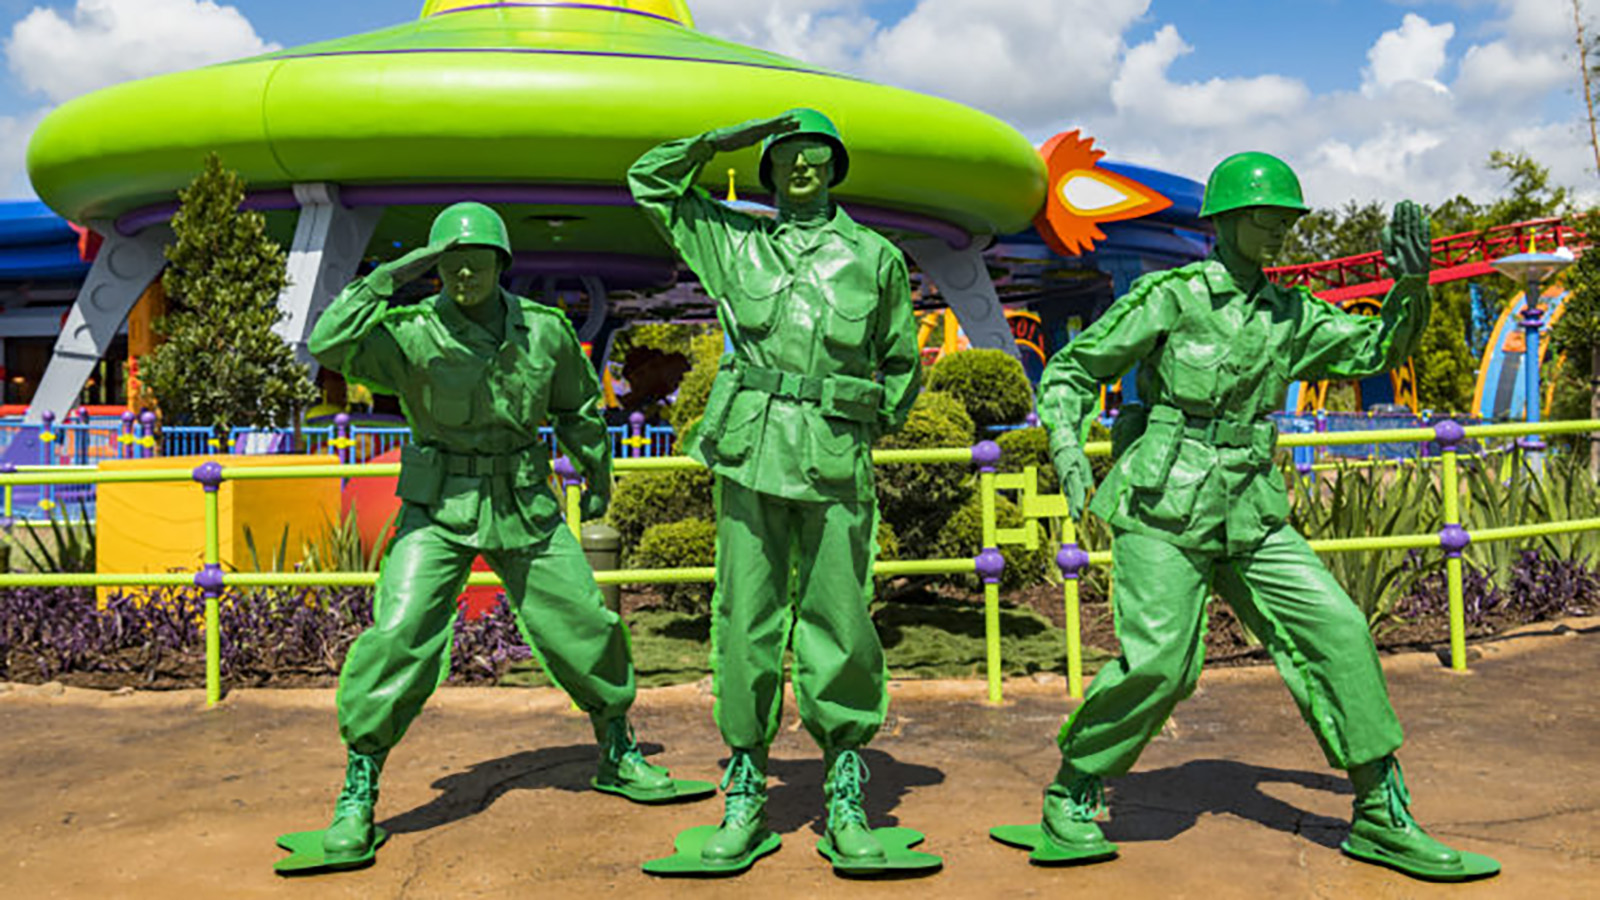 Green-Army-Man-Charaktere-aus-Disney-Filmen-in-Parks